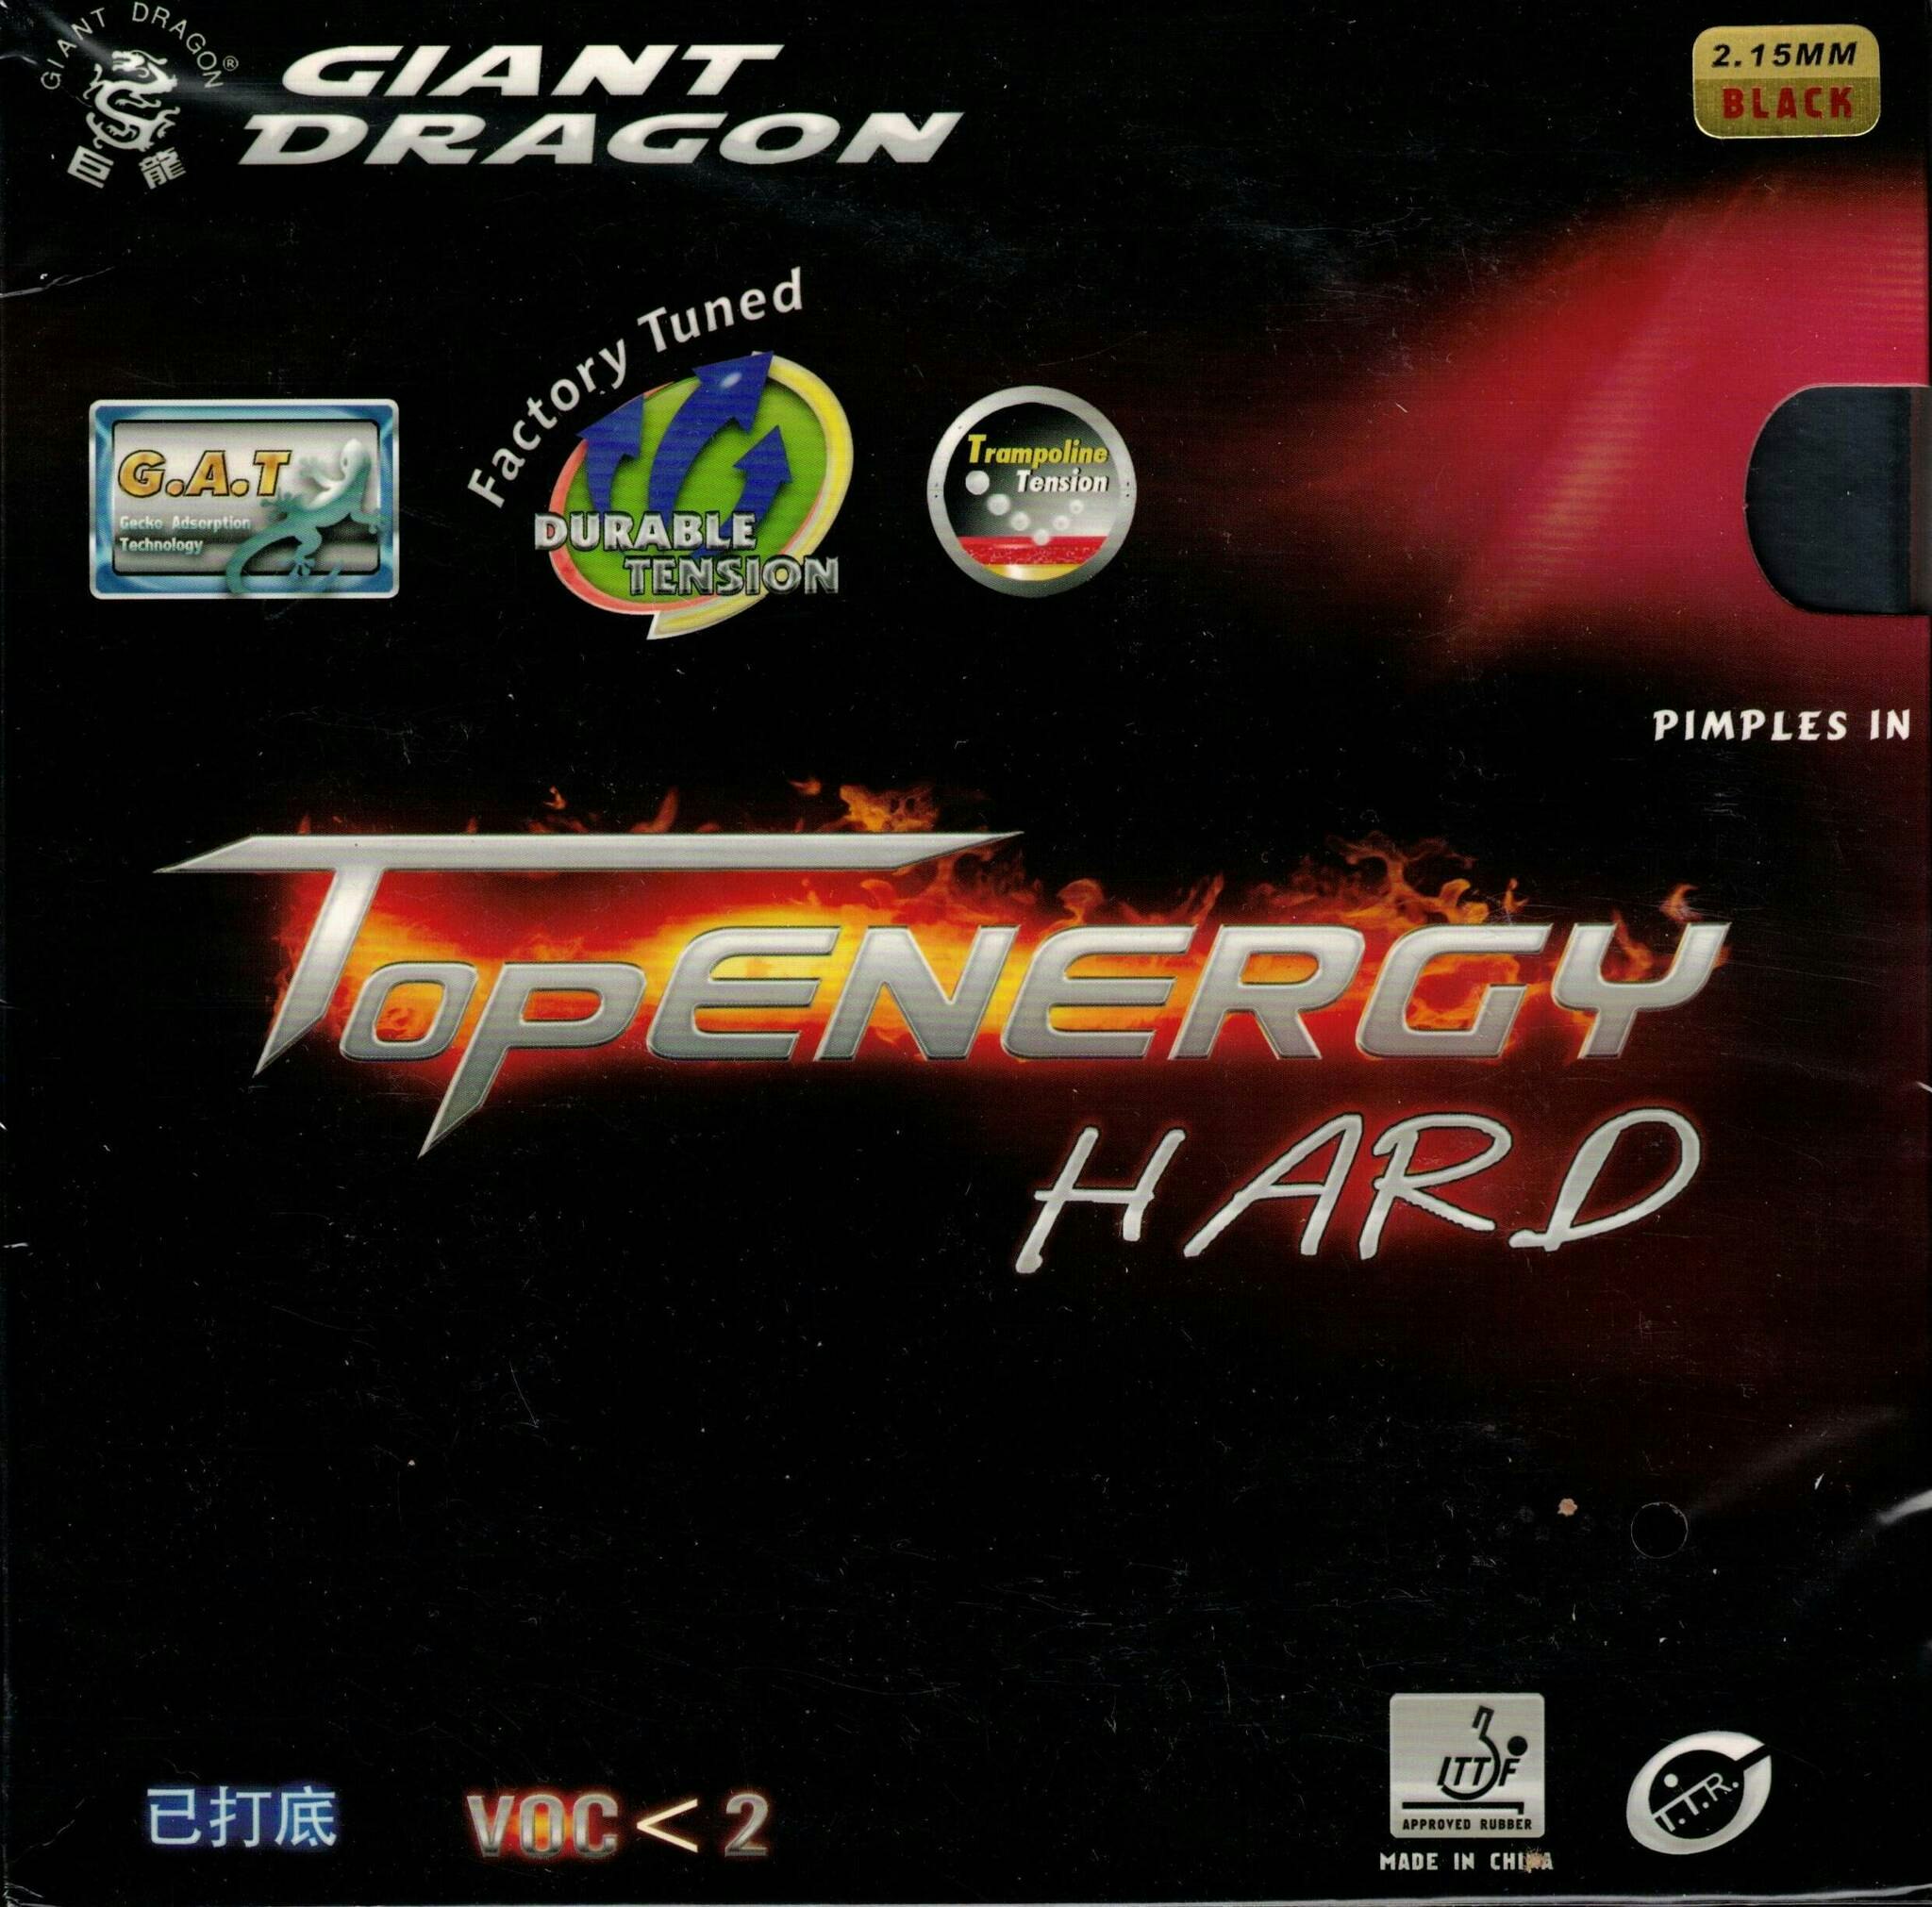 Giant Dragon - TopEnergy Hard